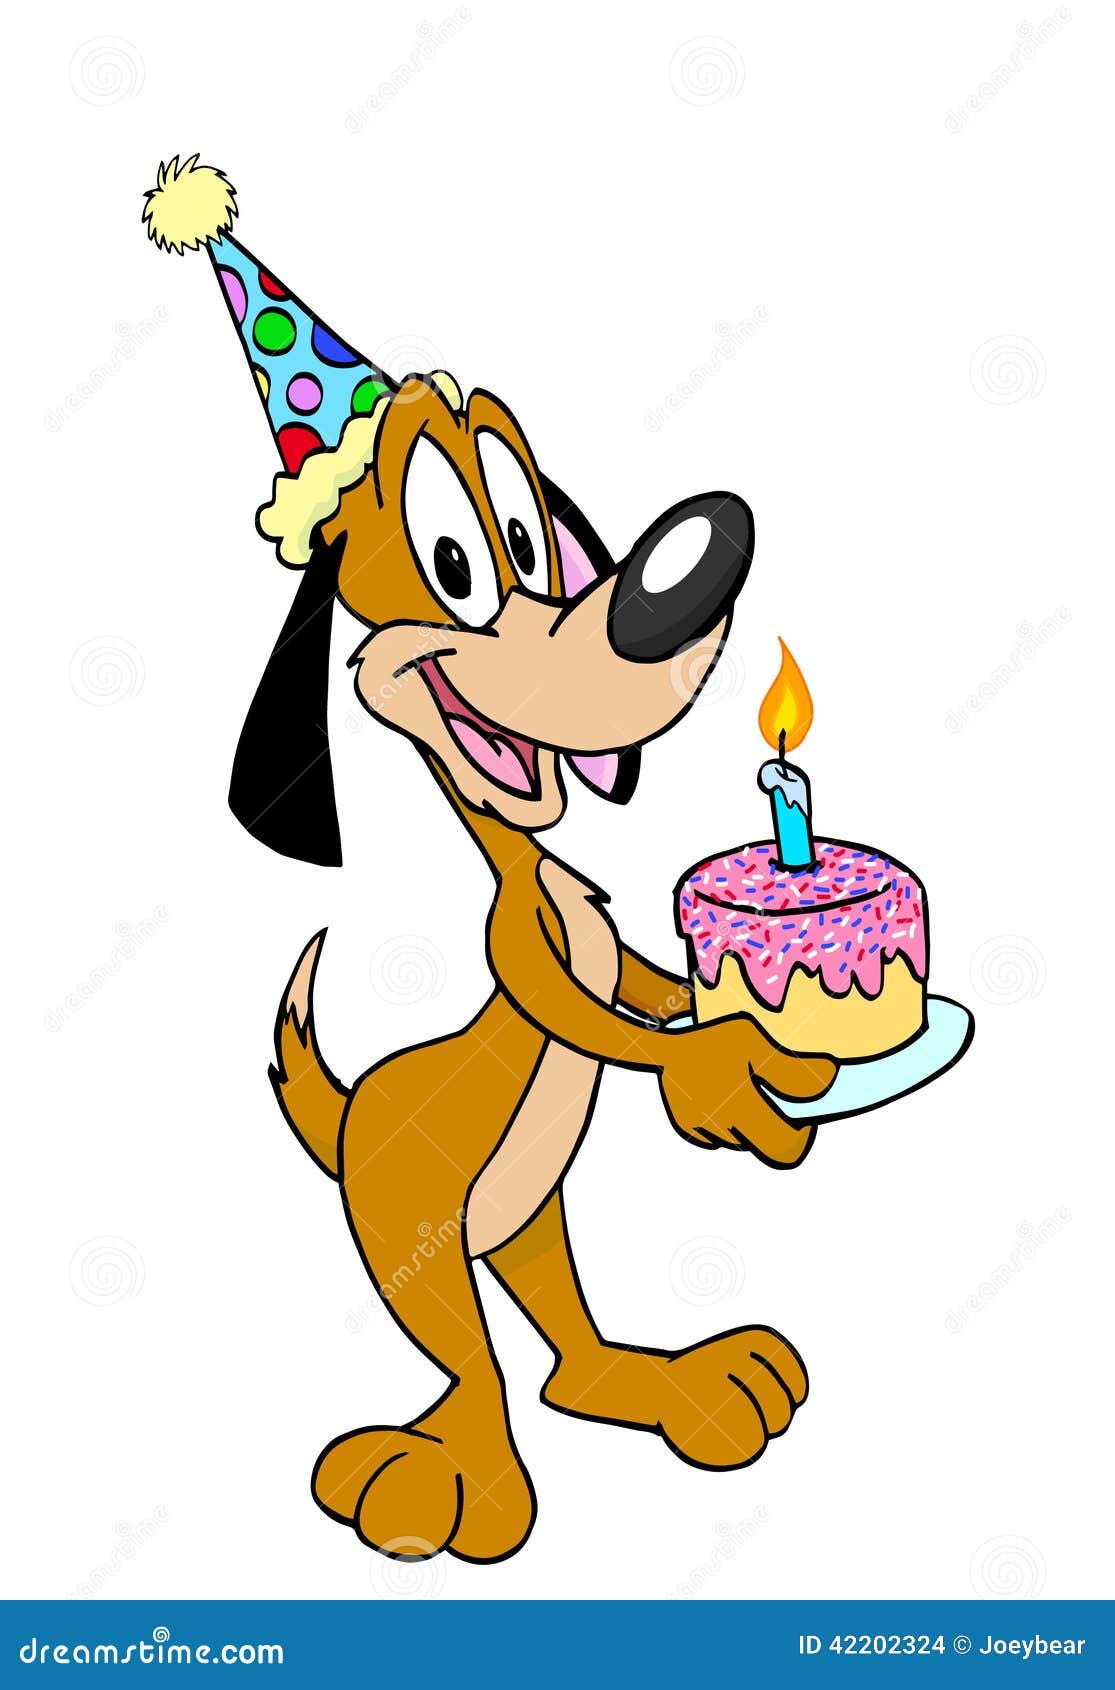 clipart dog birthday - photo #18